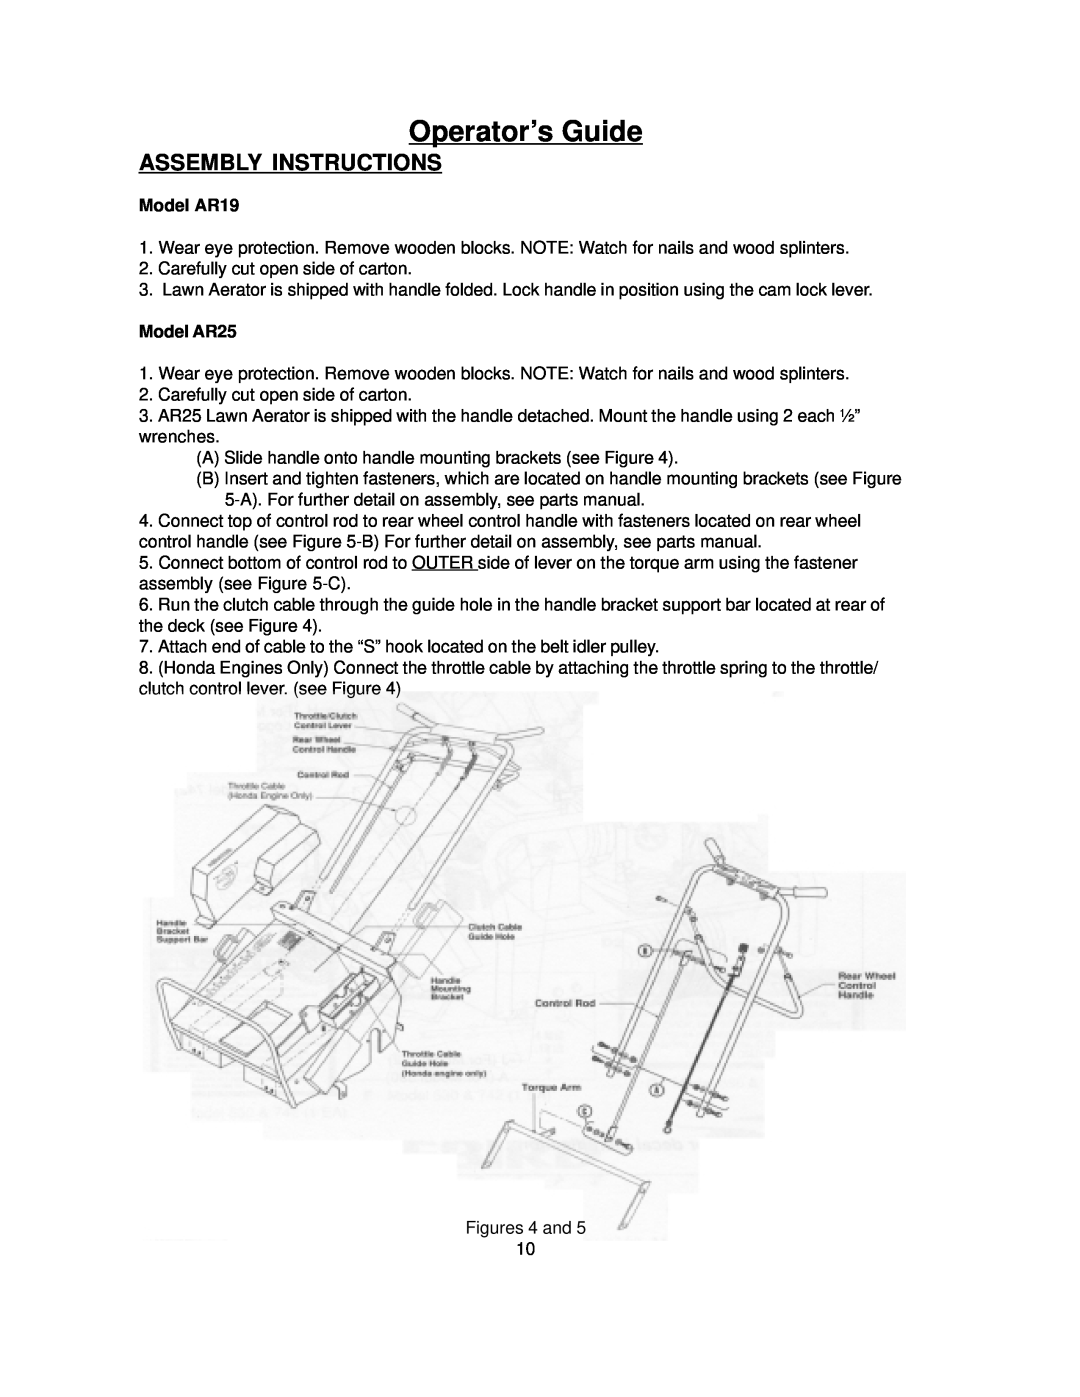 Husqvarna TA36 manual Assembly Instructions, Model AR19, Model AR25, Operator’s Guide 